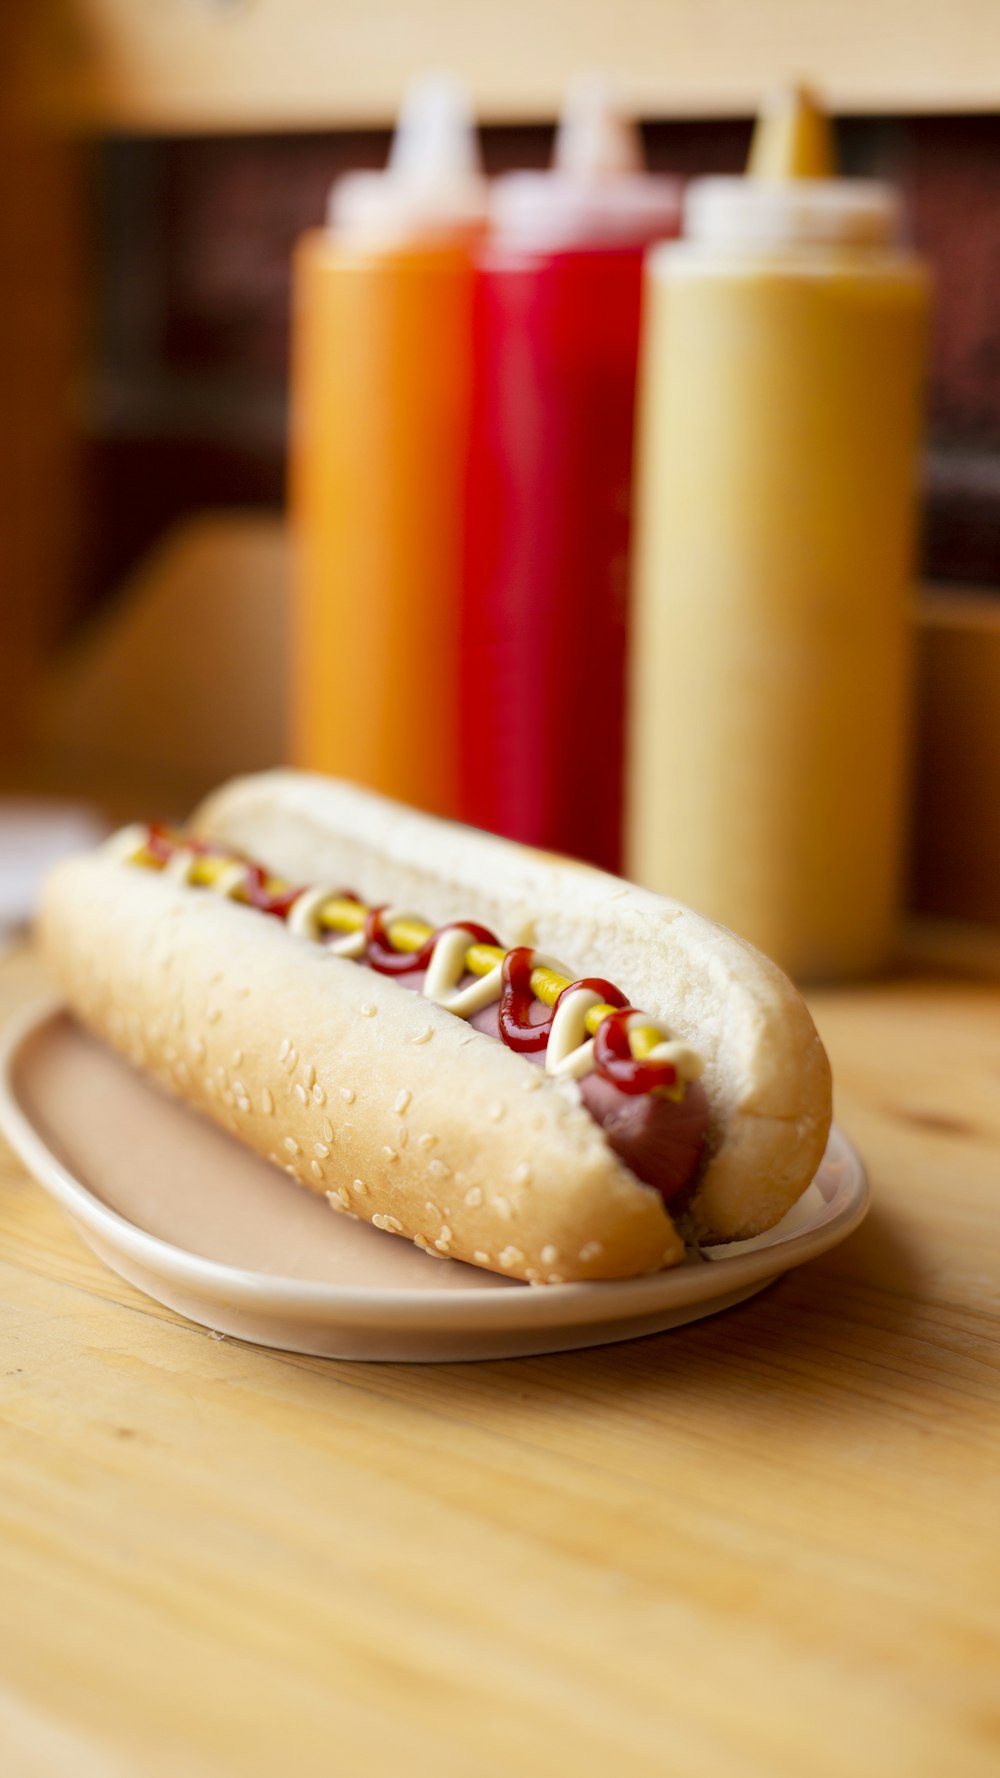 500+ Hot Dog Pictures [HD] | Download Free Images on Unsplash